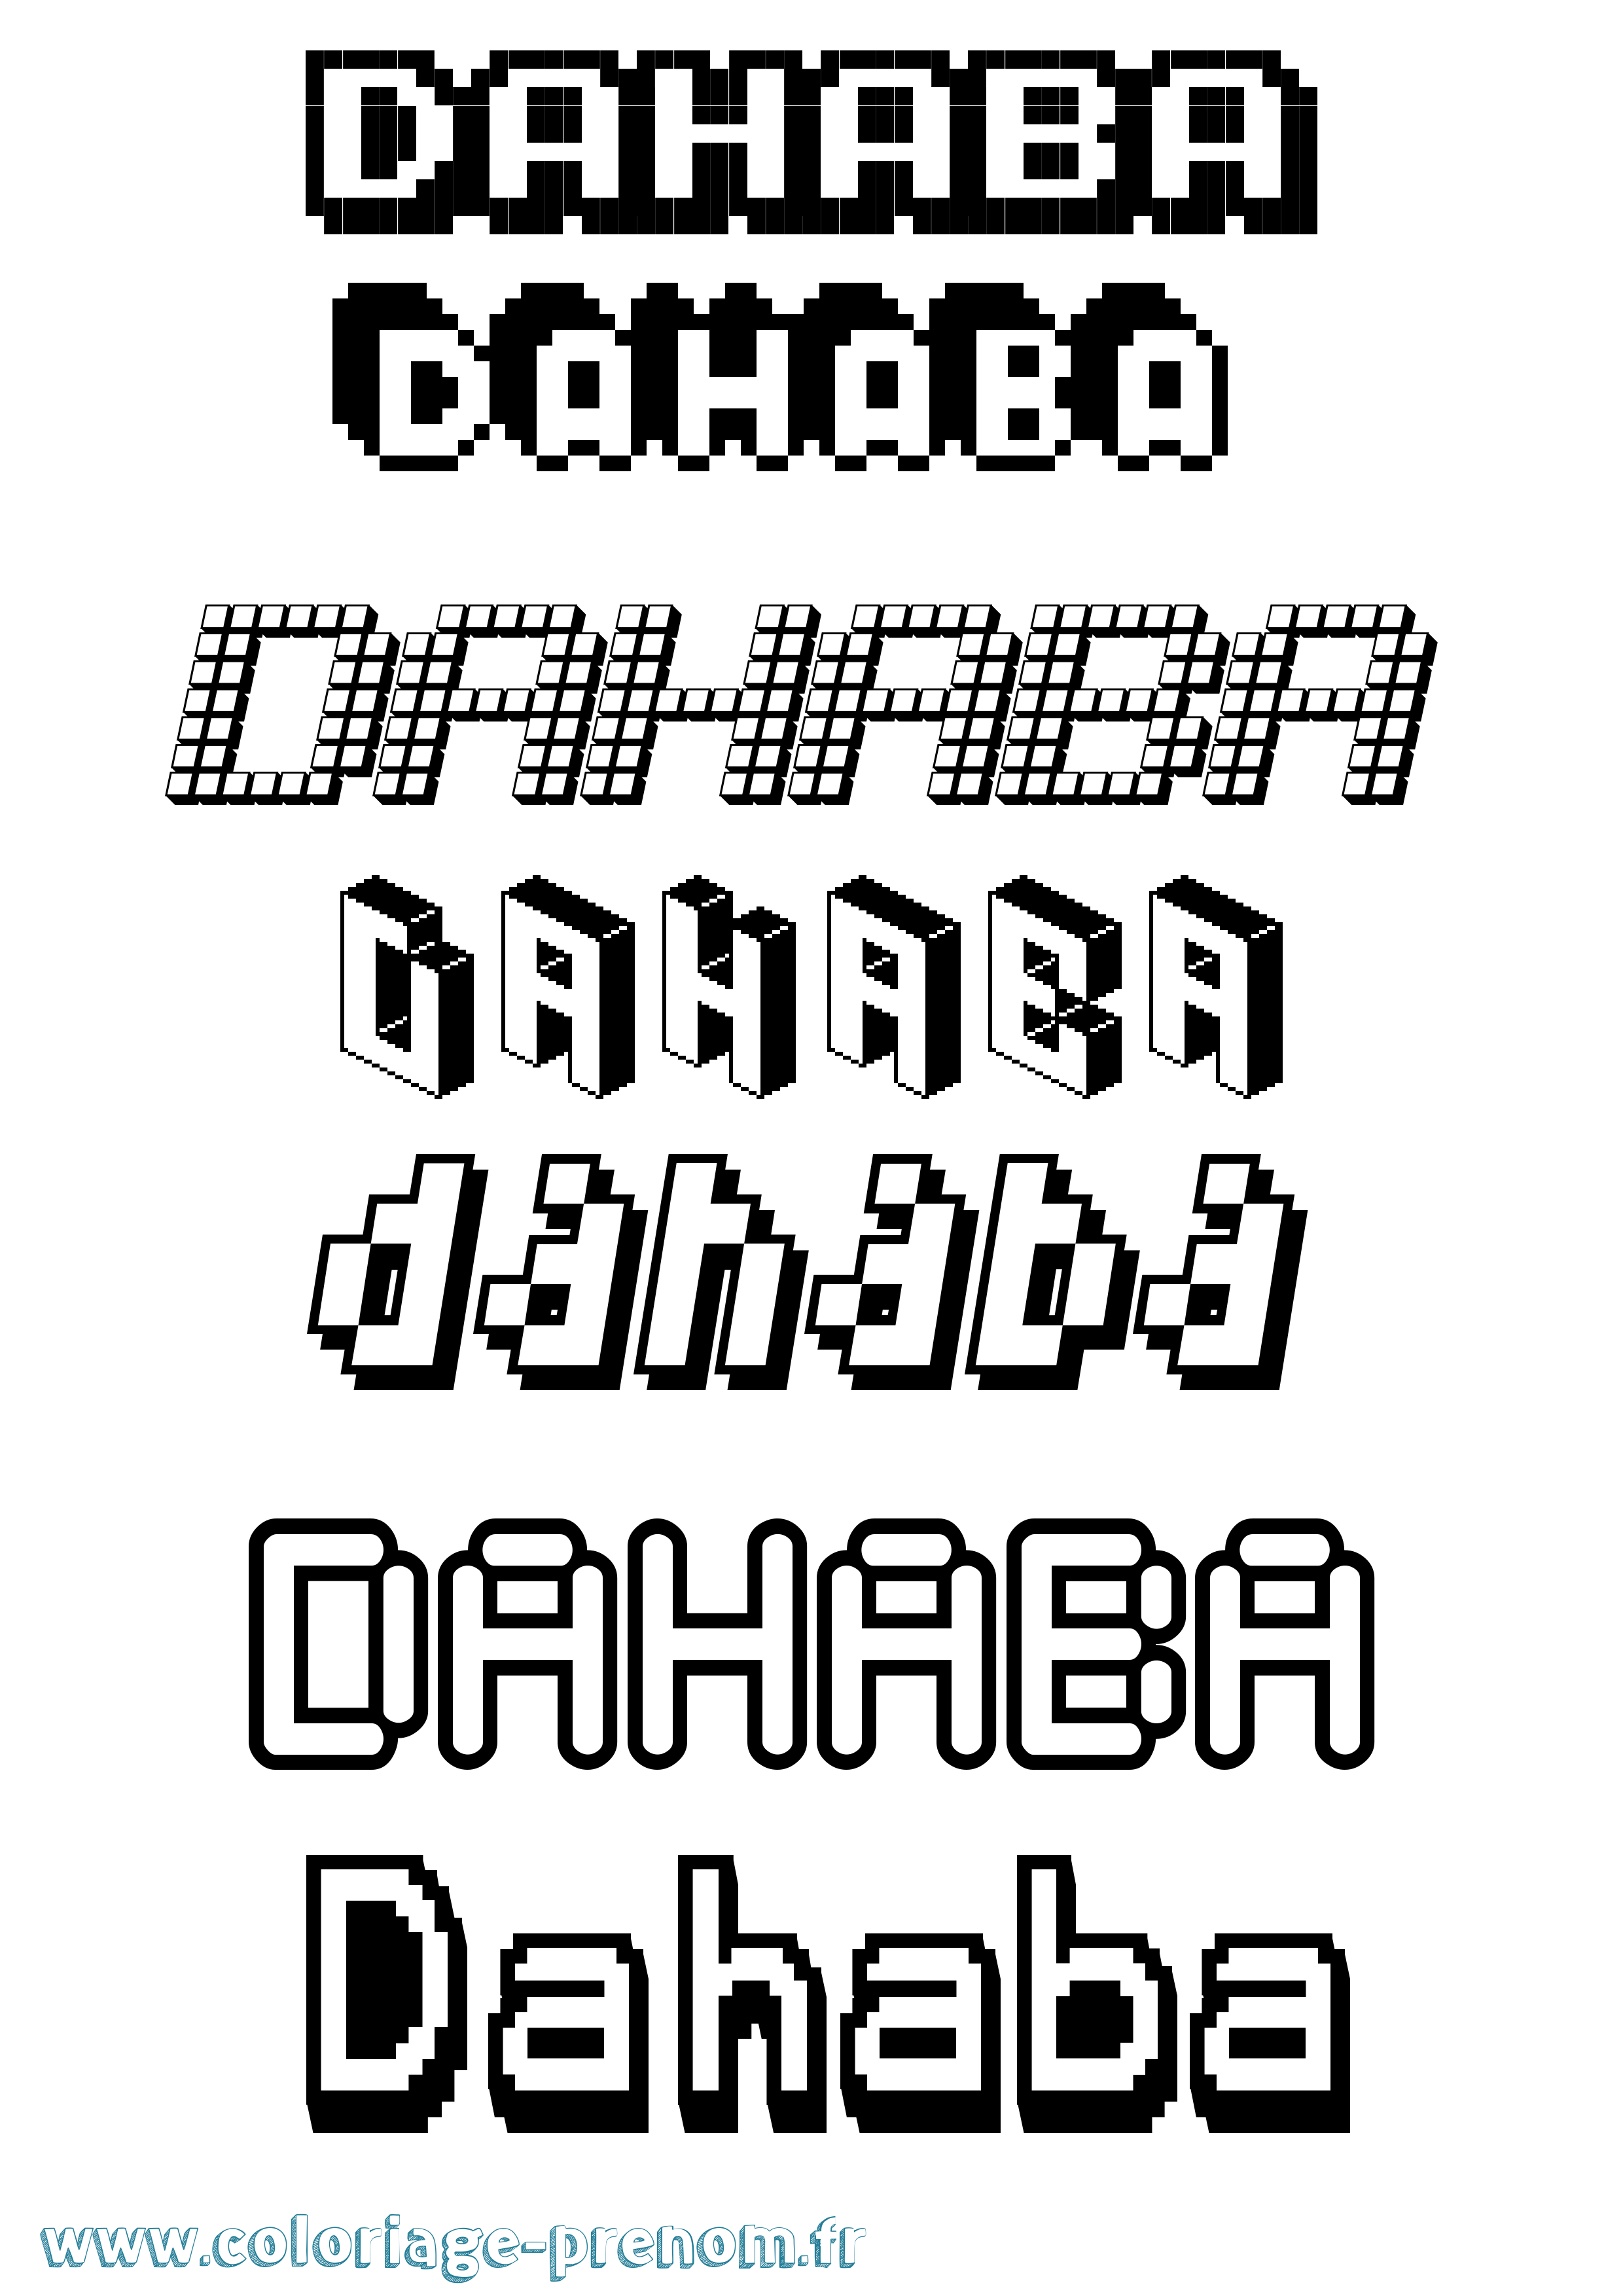 Coloriage prénom Dahaba Pixel